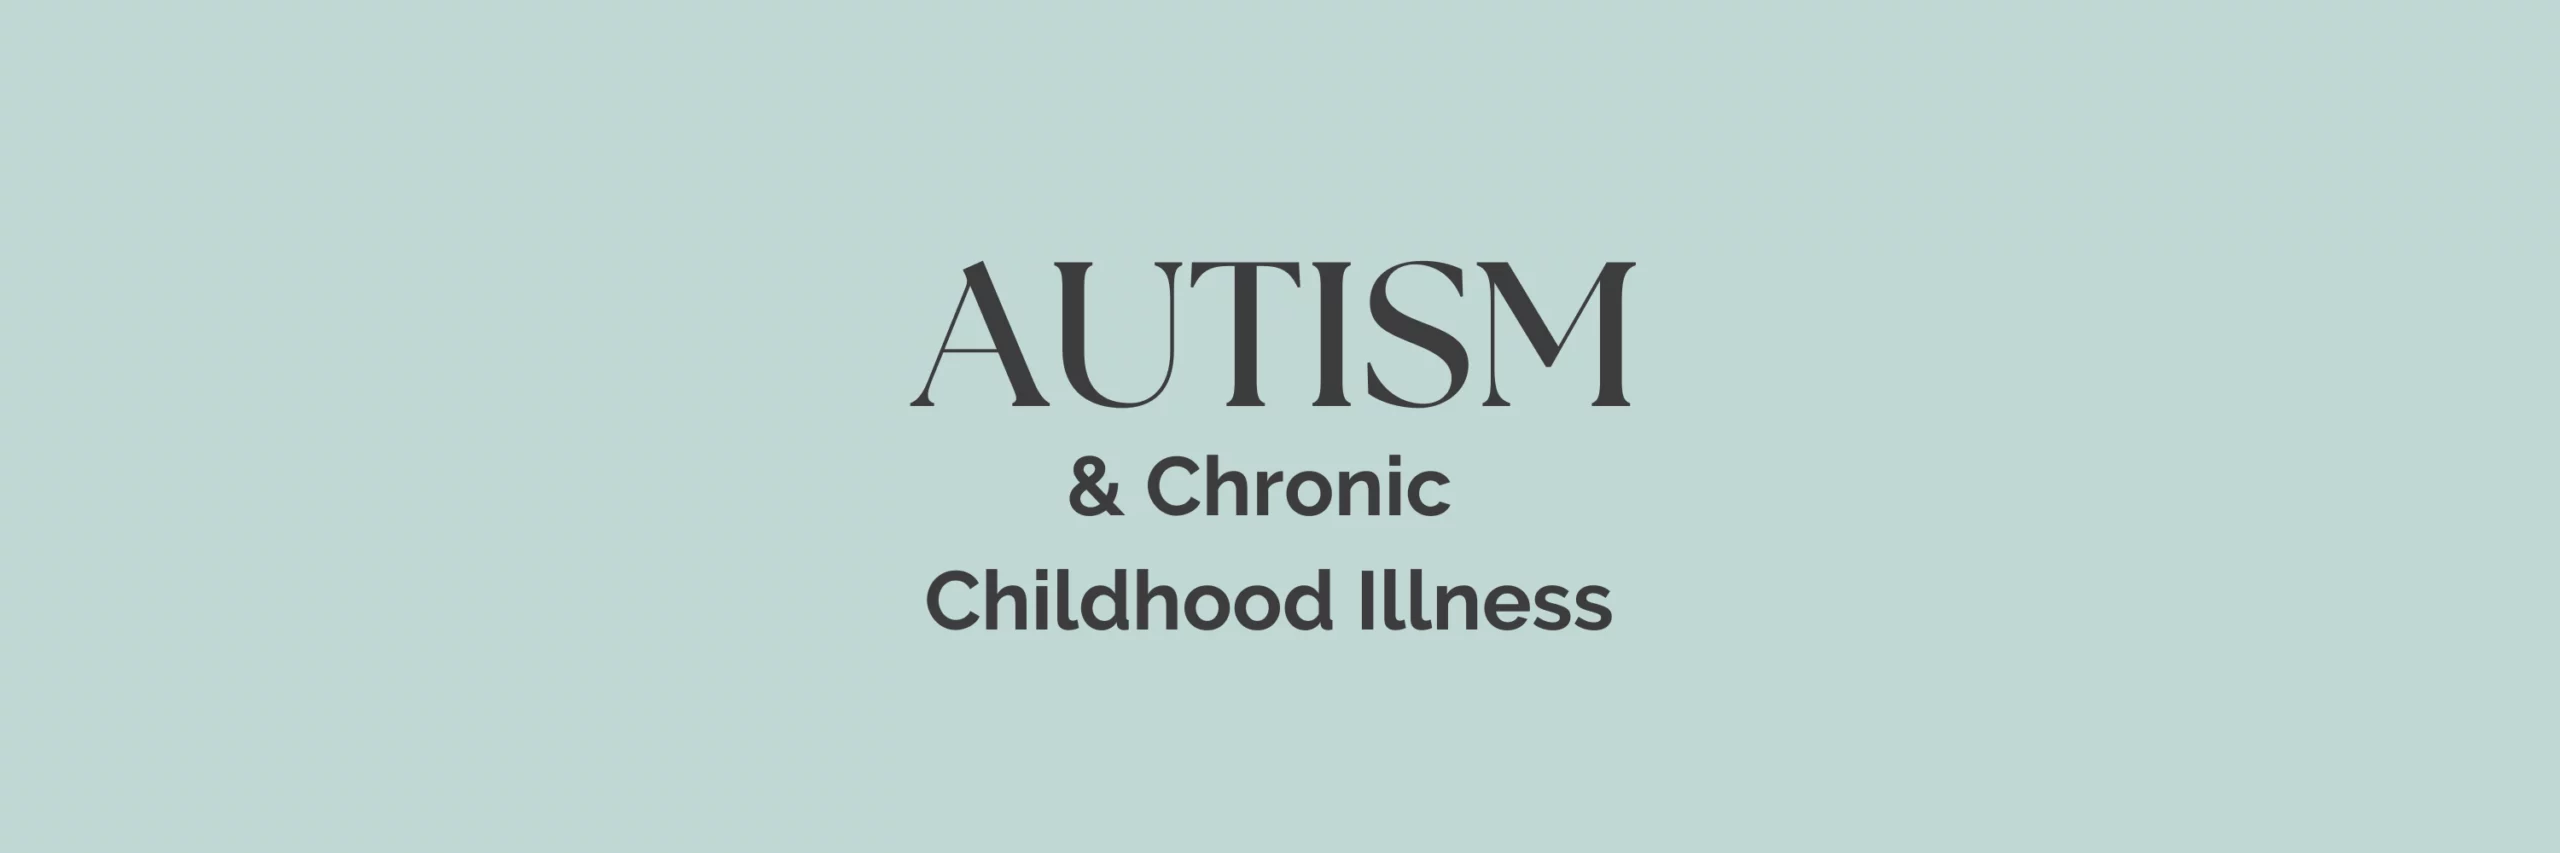 autism & chronic childhood illness